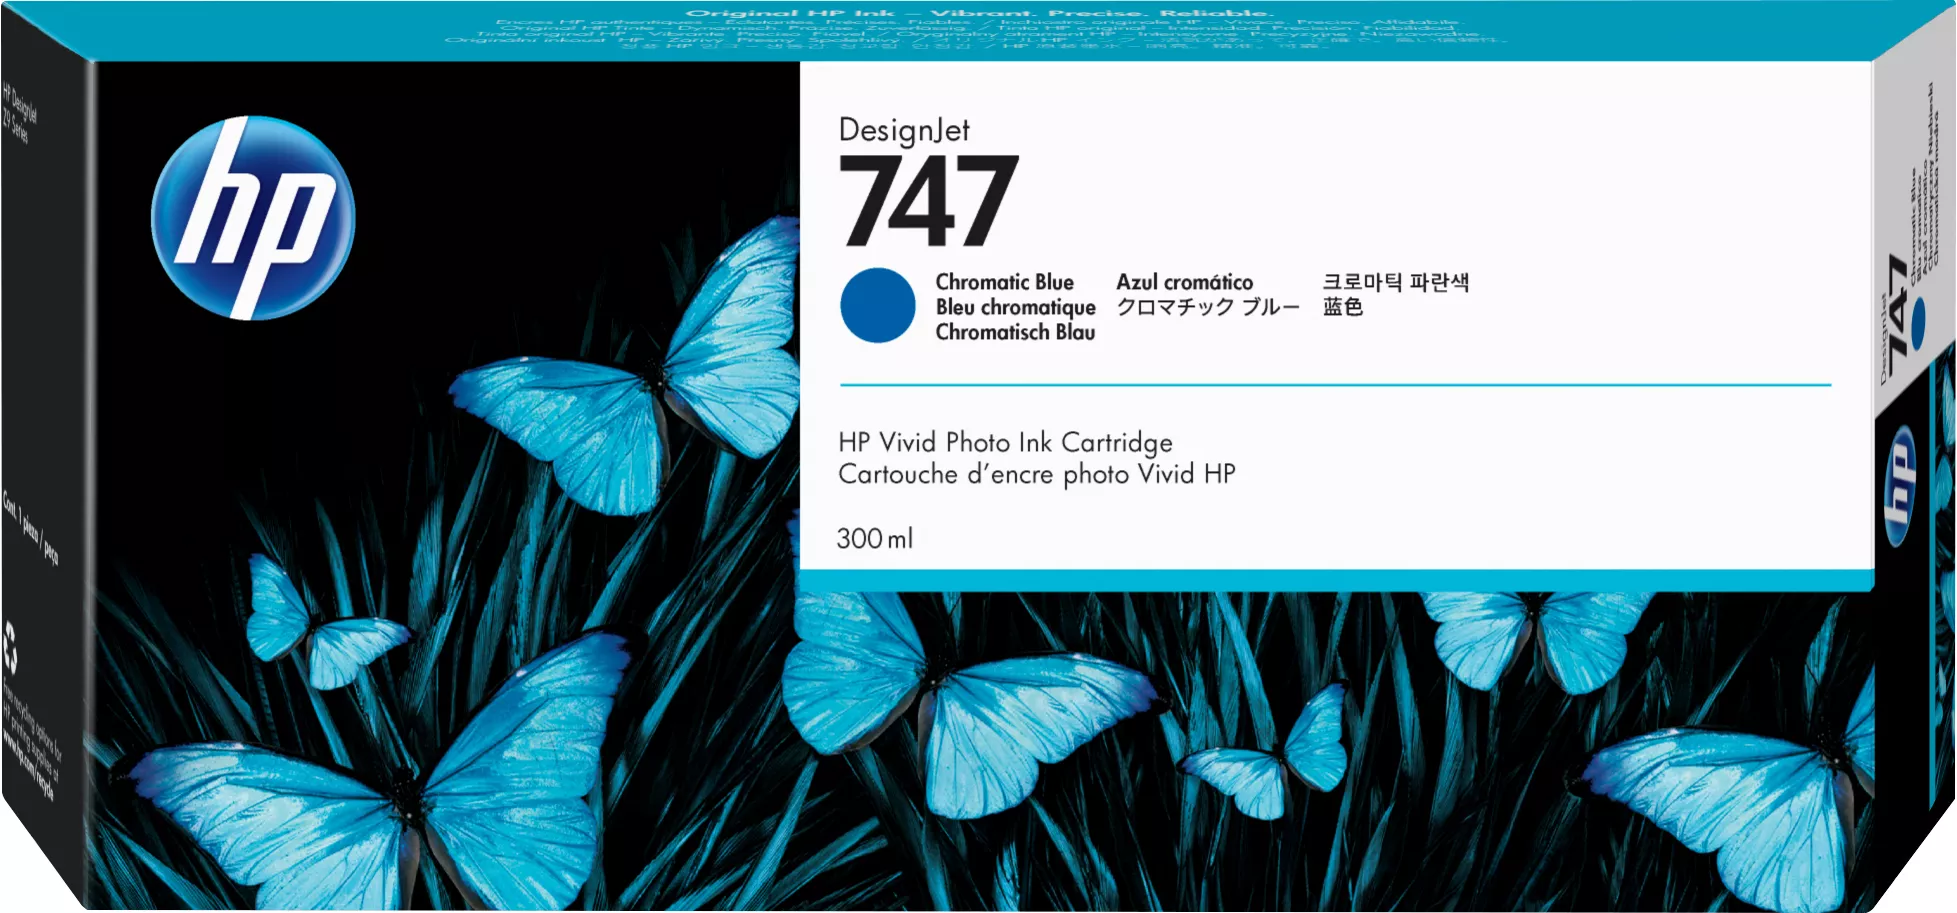 Vente HP 747 300-ml Chromatic Blue Ink Cartridge HP au meilleur prix - visuel 2